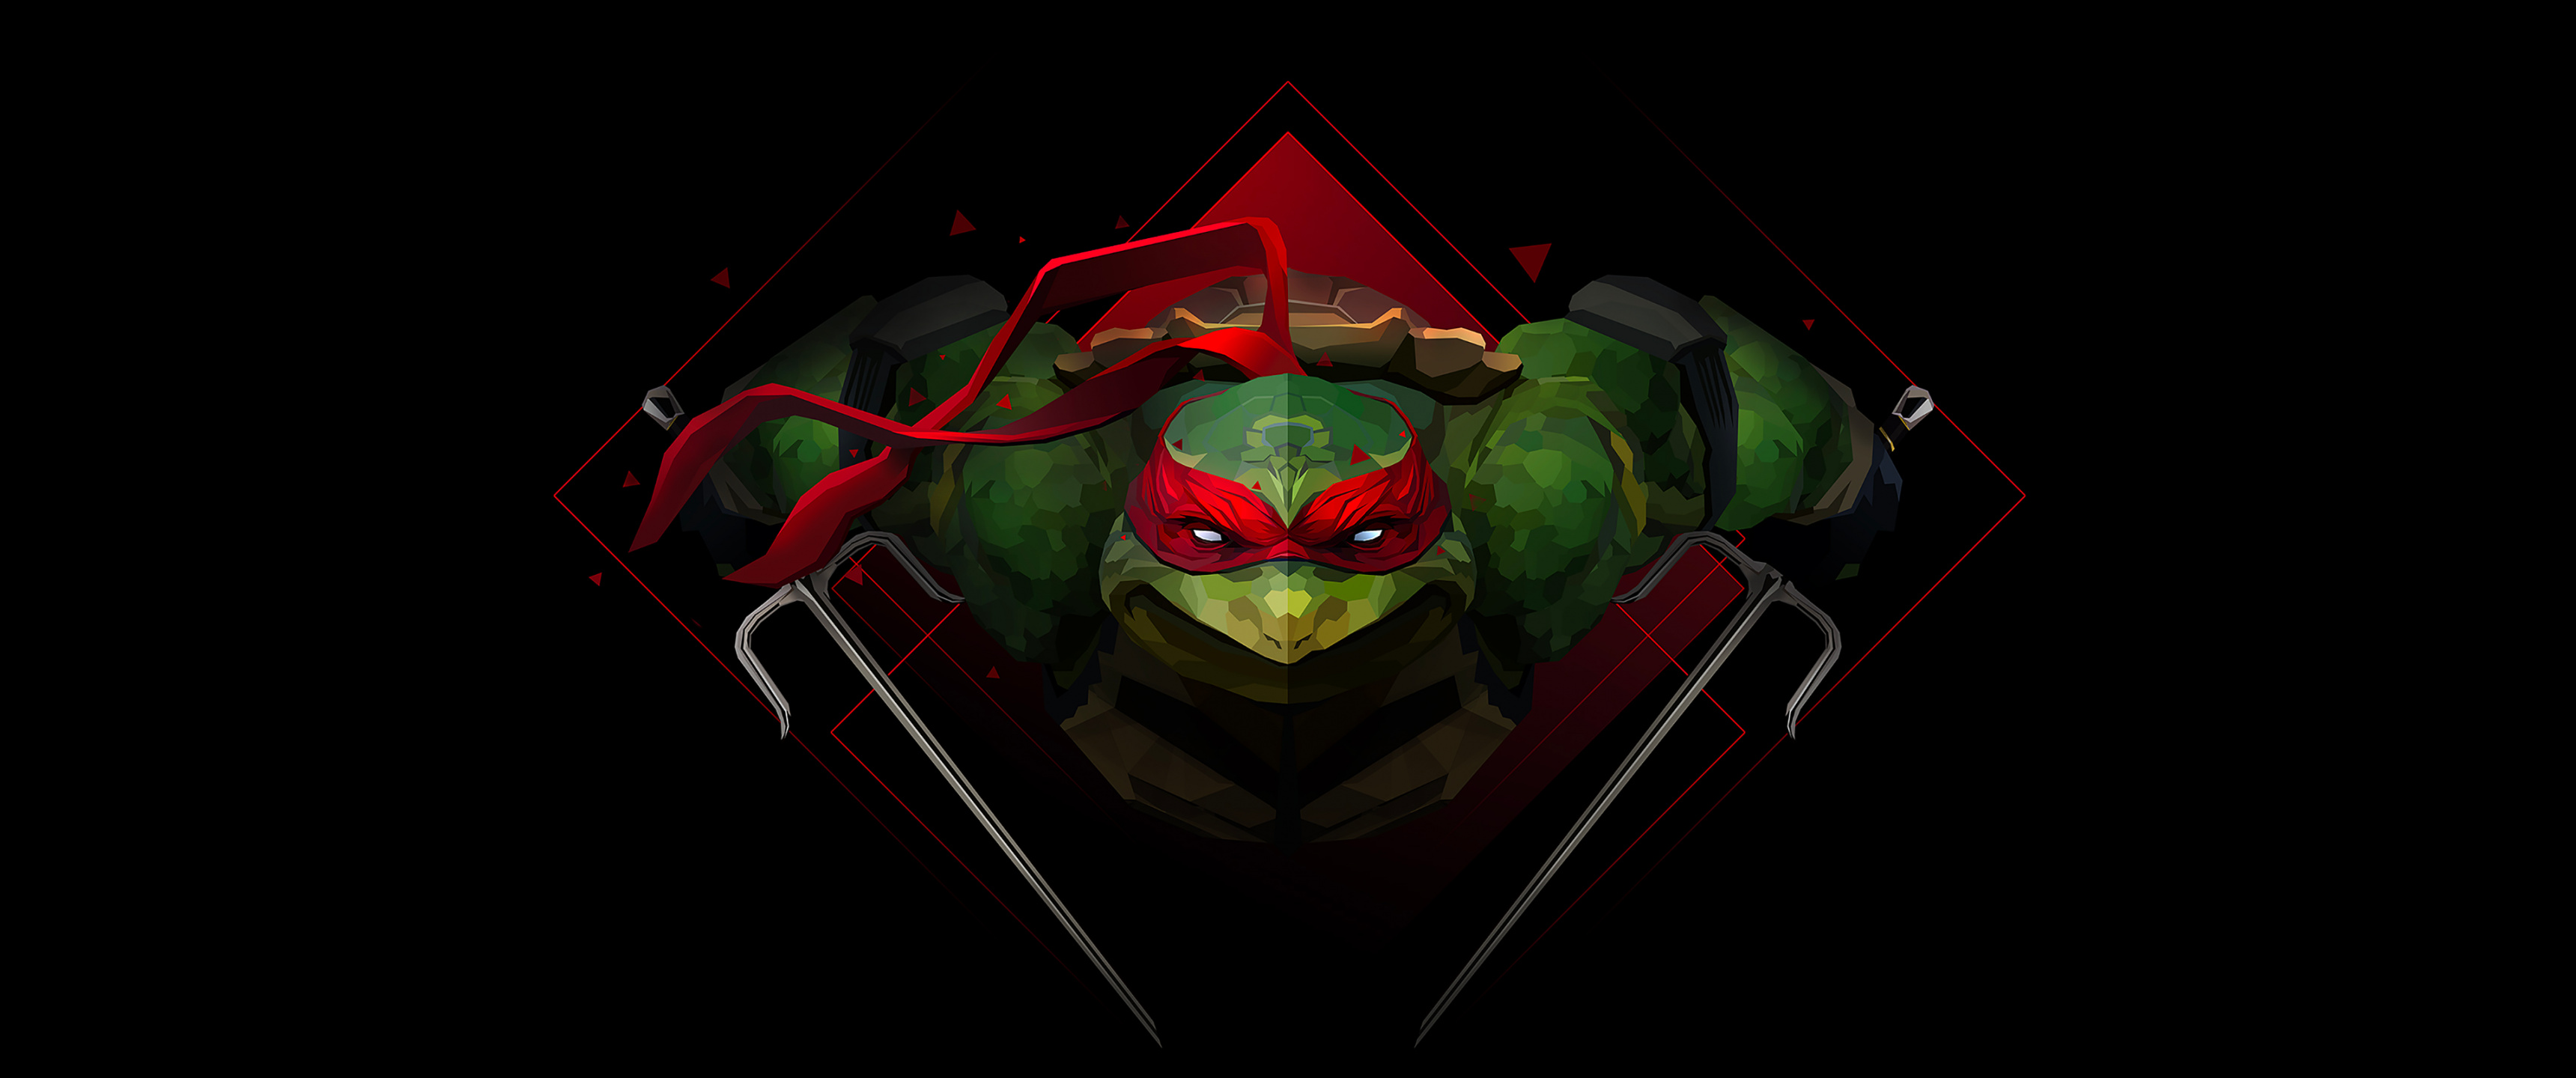 Mutant Ninja Turtles, Raphael wallpaper, TMNT low poly, Artwork, 3440x1440 Dual Screen Desktop